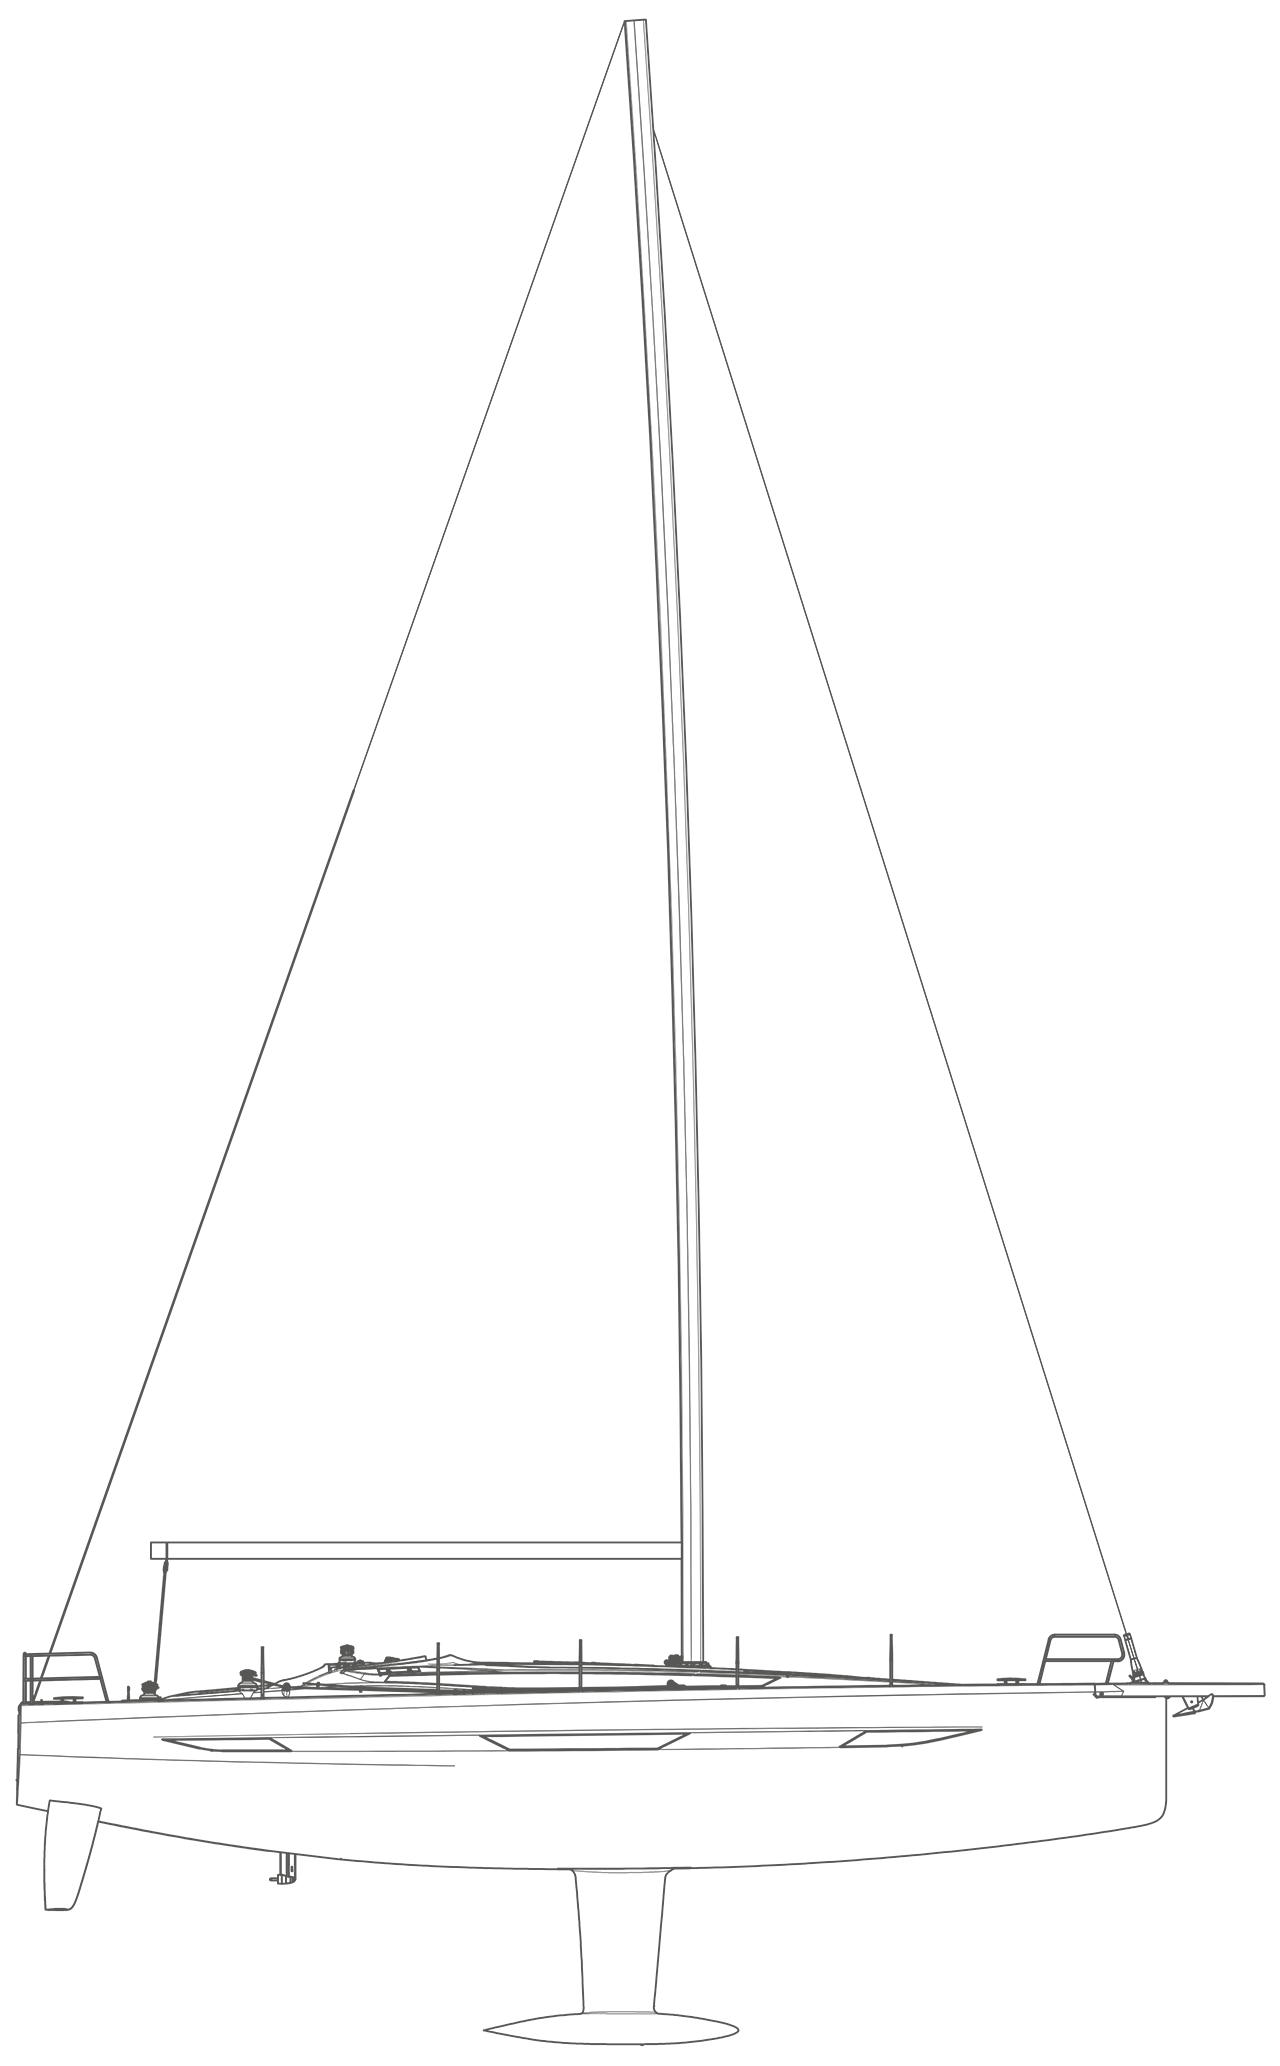 Elan E6 sailing yacht technical side-view drawing